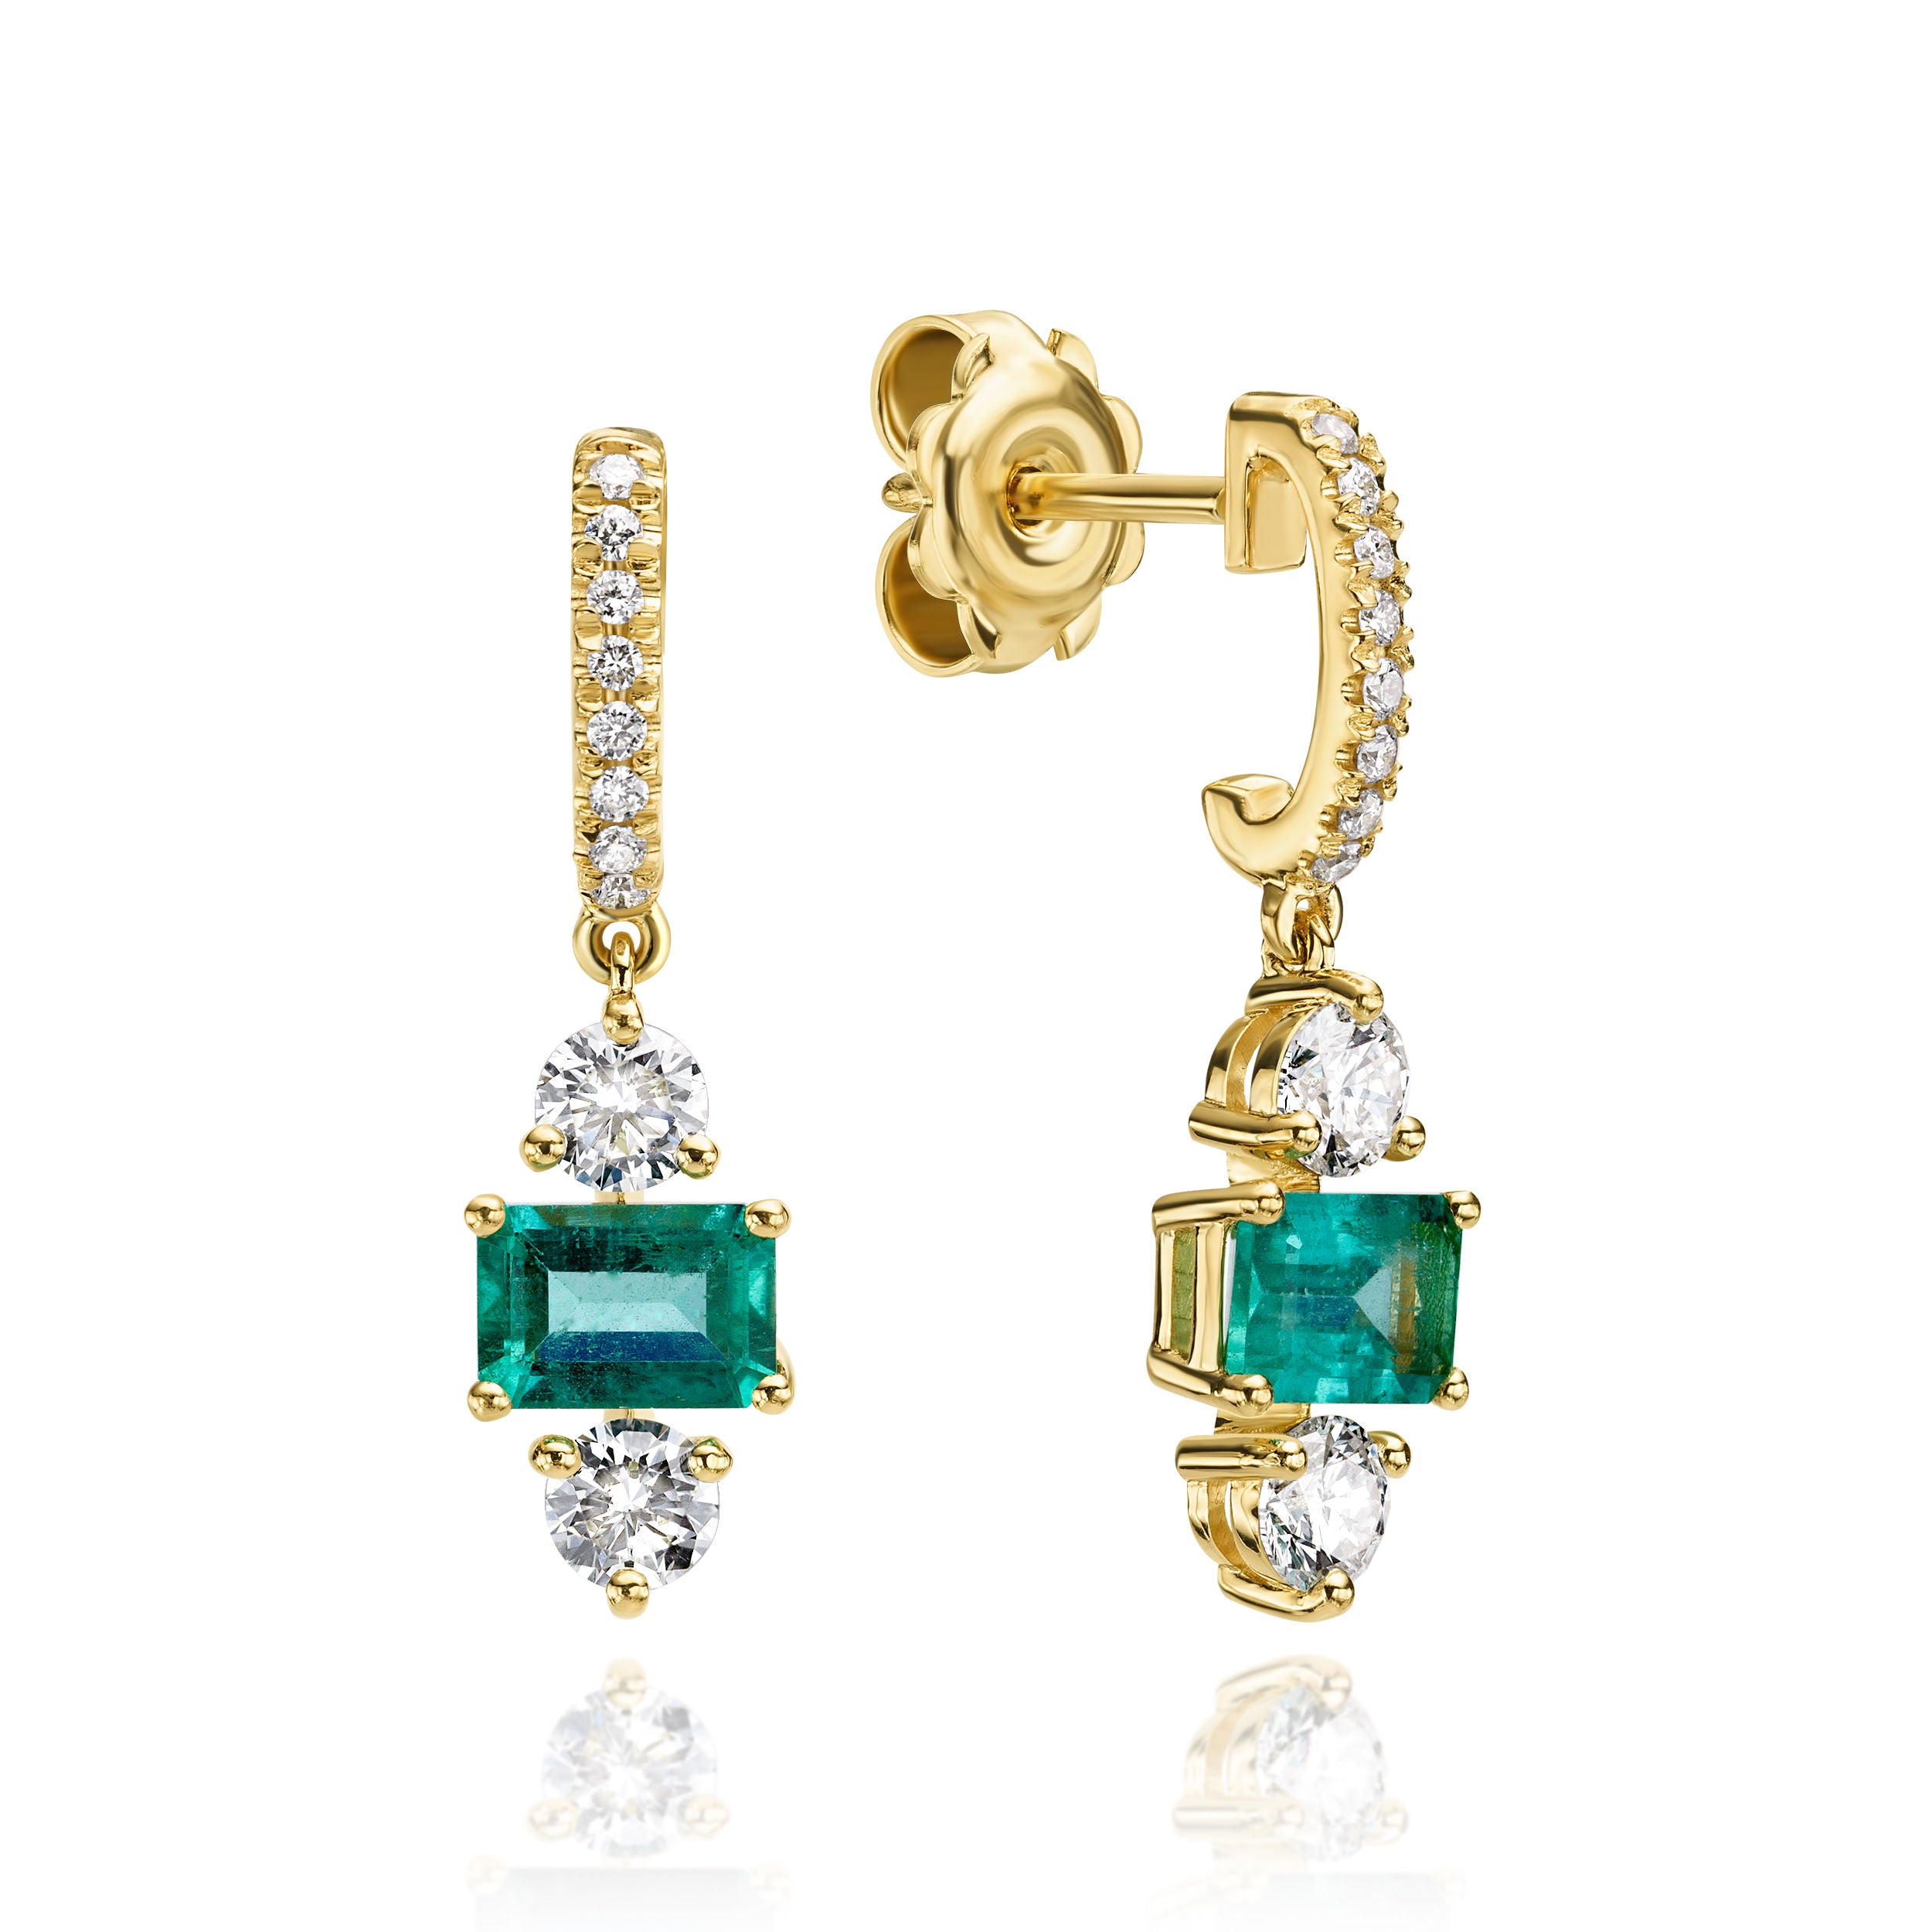 EC Emerald Earrings With Diamonds - 1.93ct TW